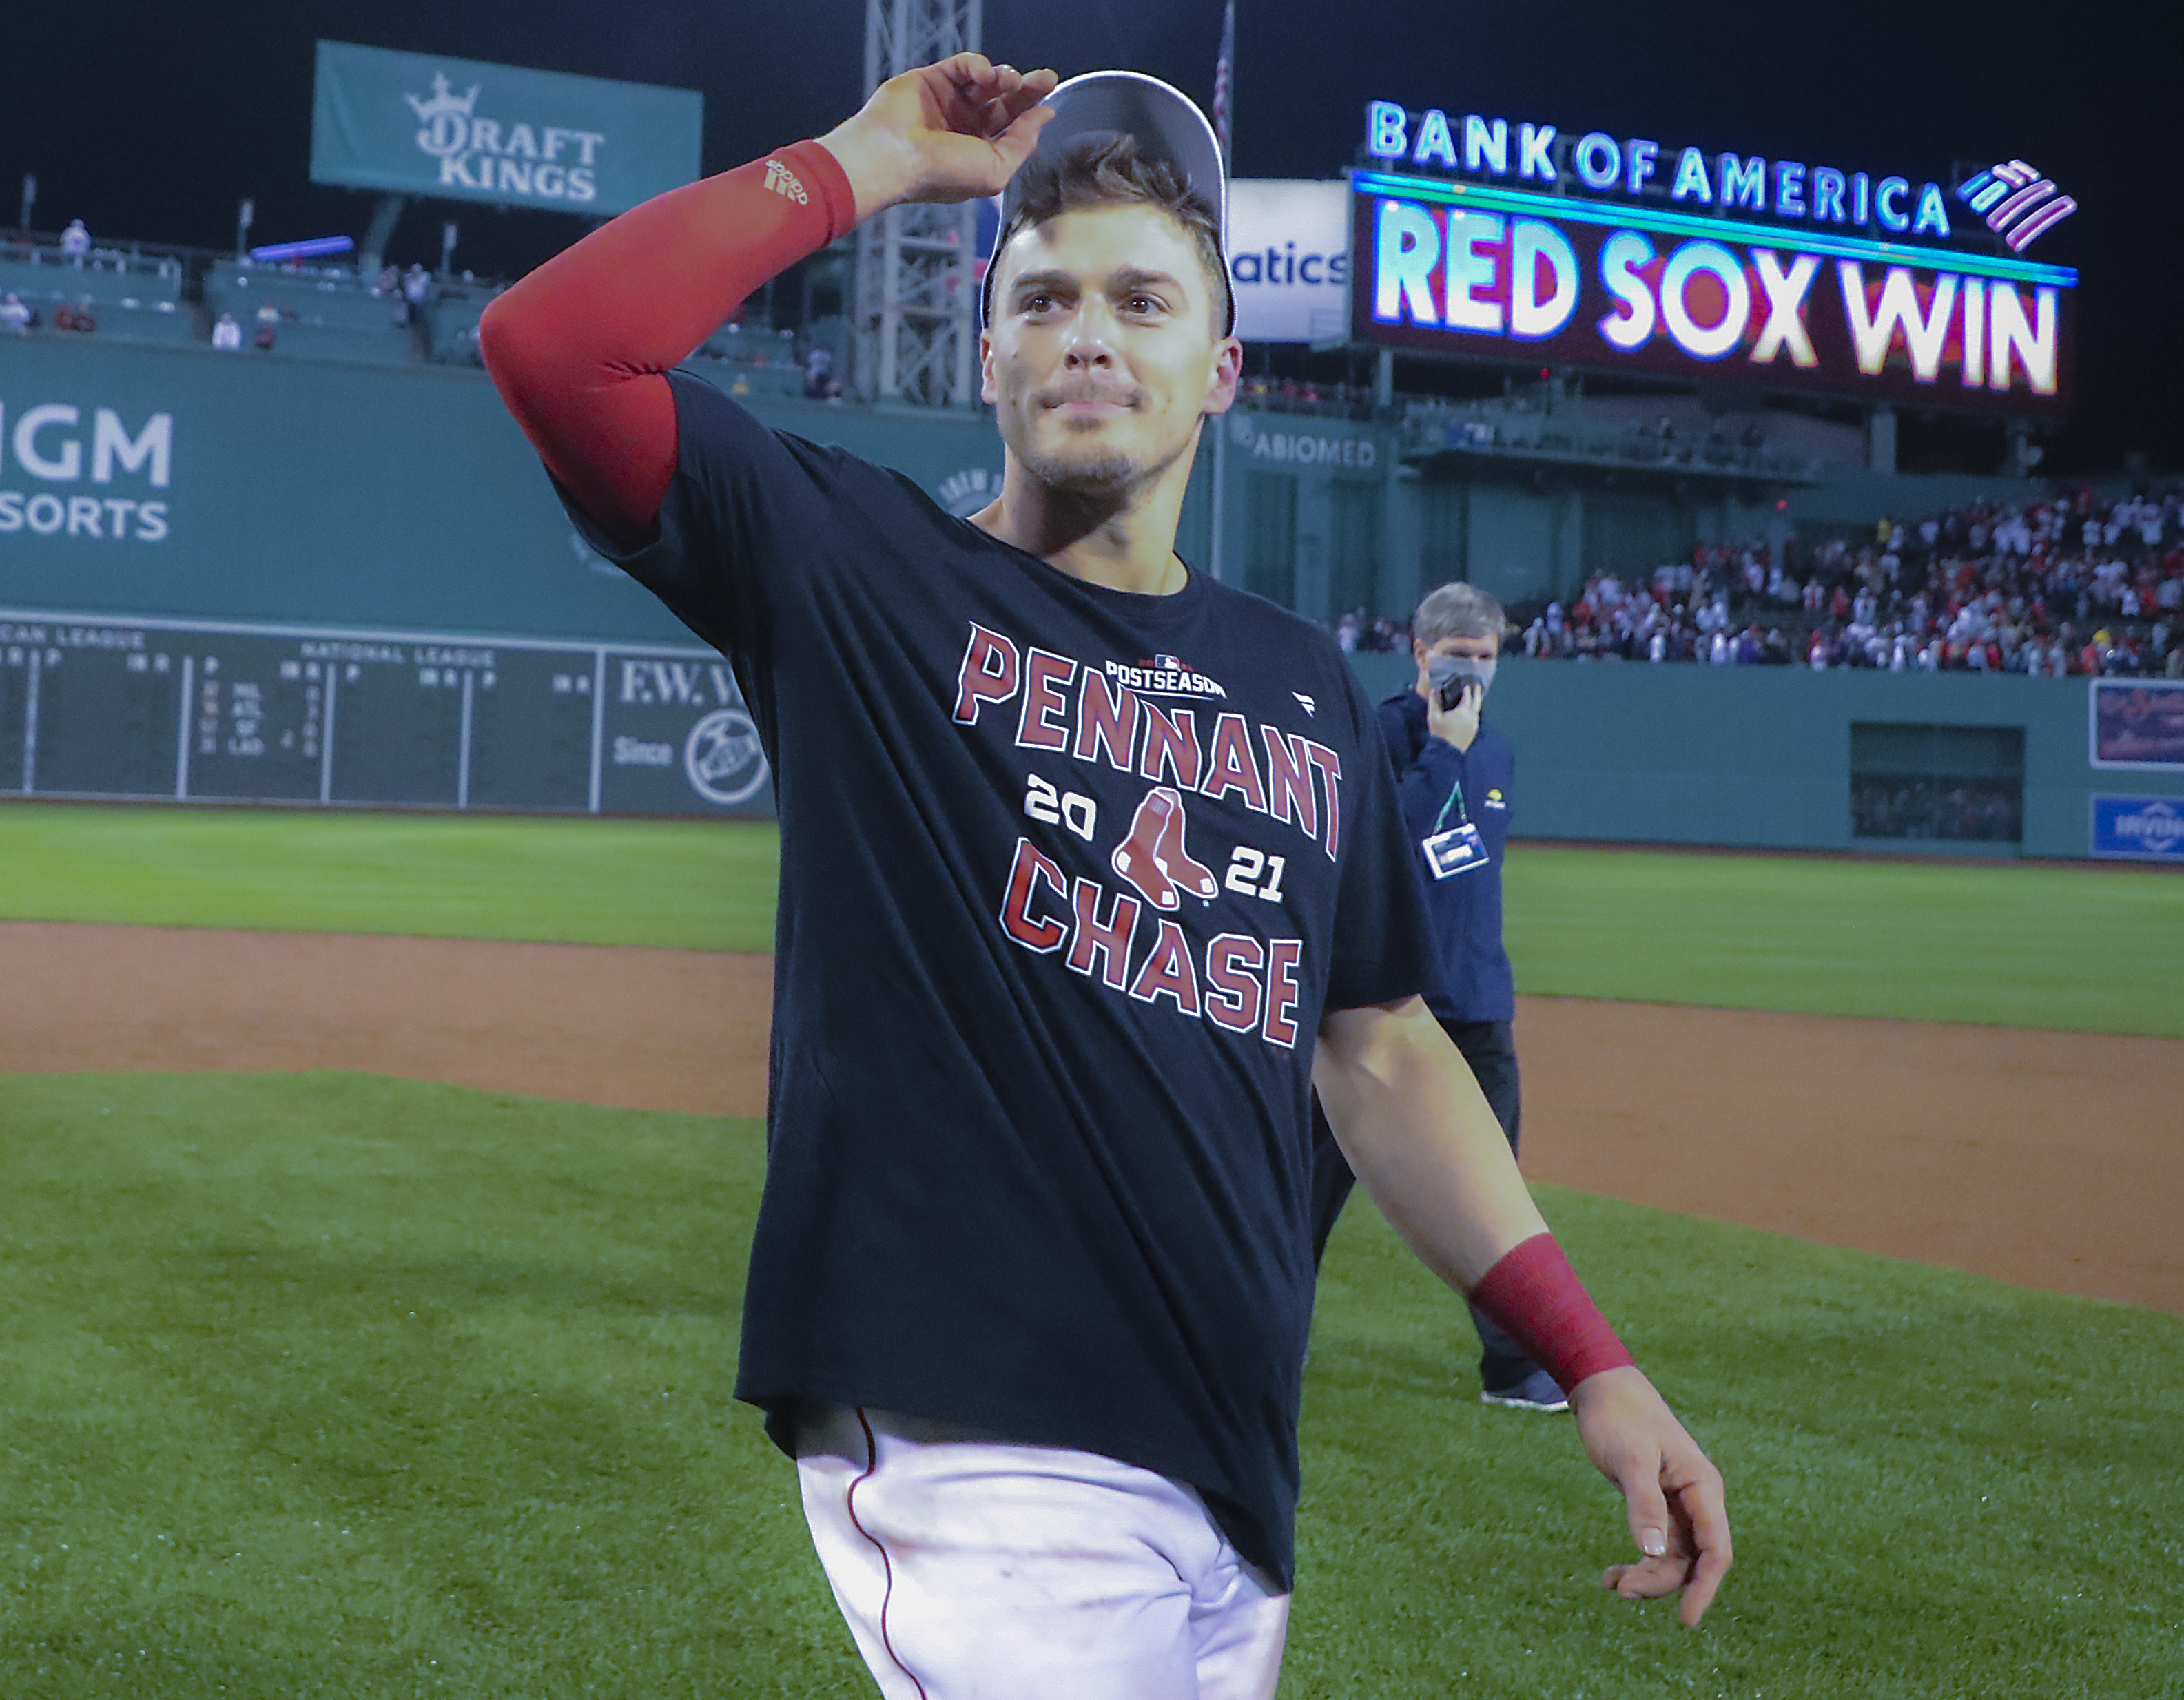 Red Sox home run celebration making baseball fun again (Video)